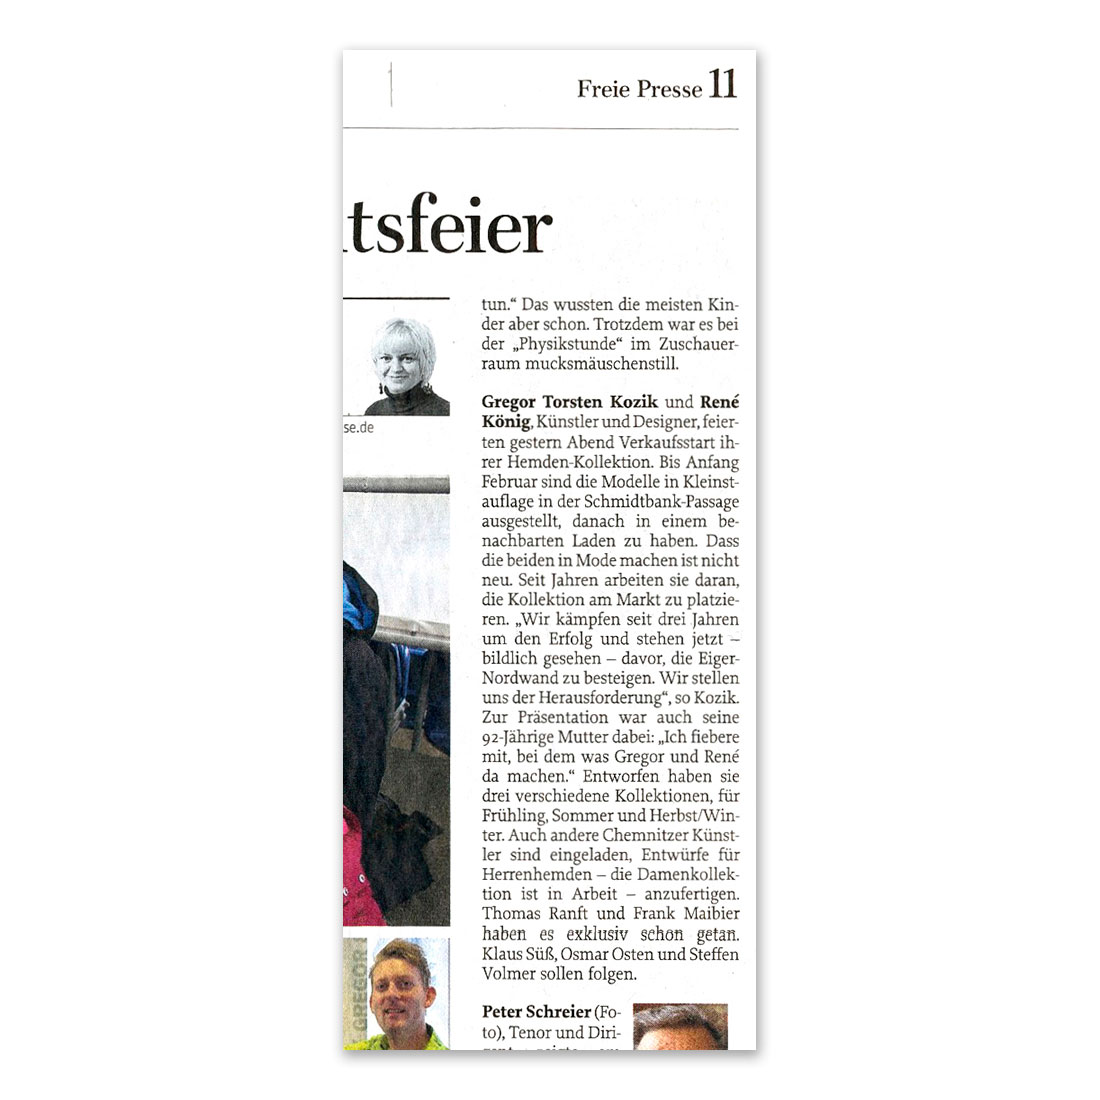 GERMENS artfashion - Freie Presse Chemnitz - 09.12.2013